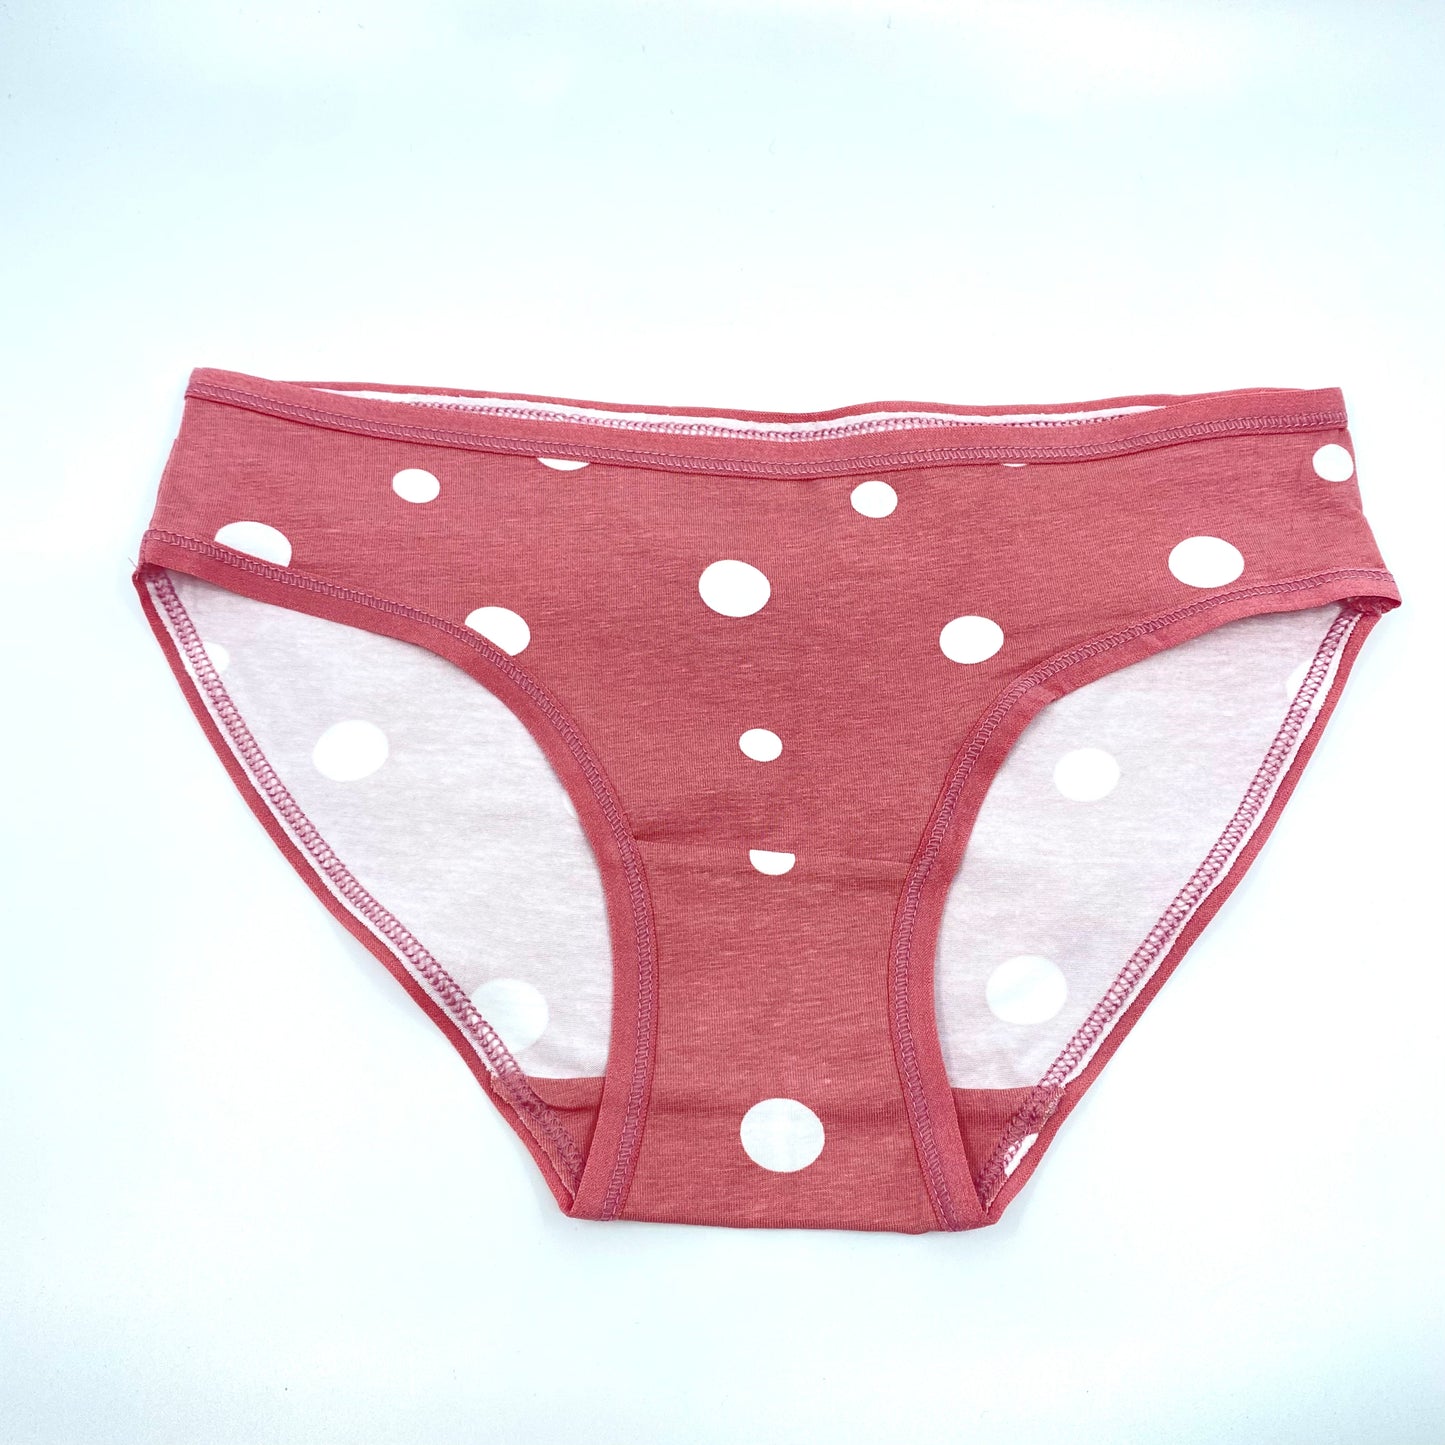 Women's organic cotton low-rise bikini bottoms - pink with white dots